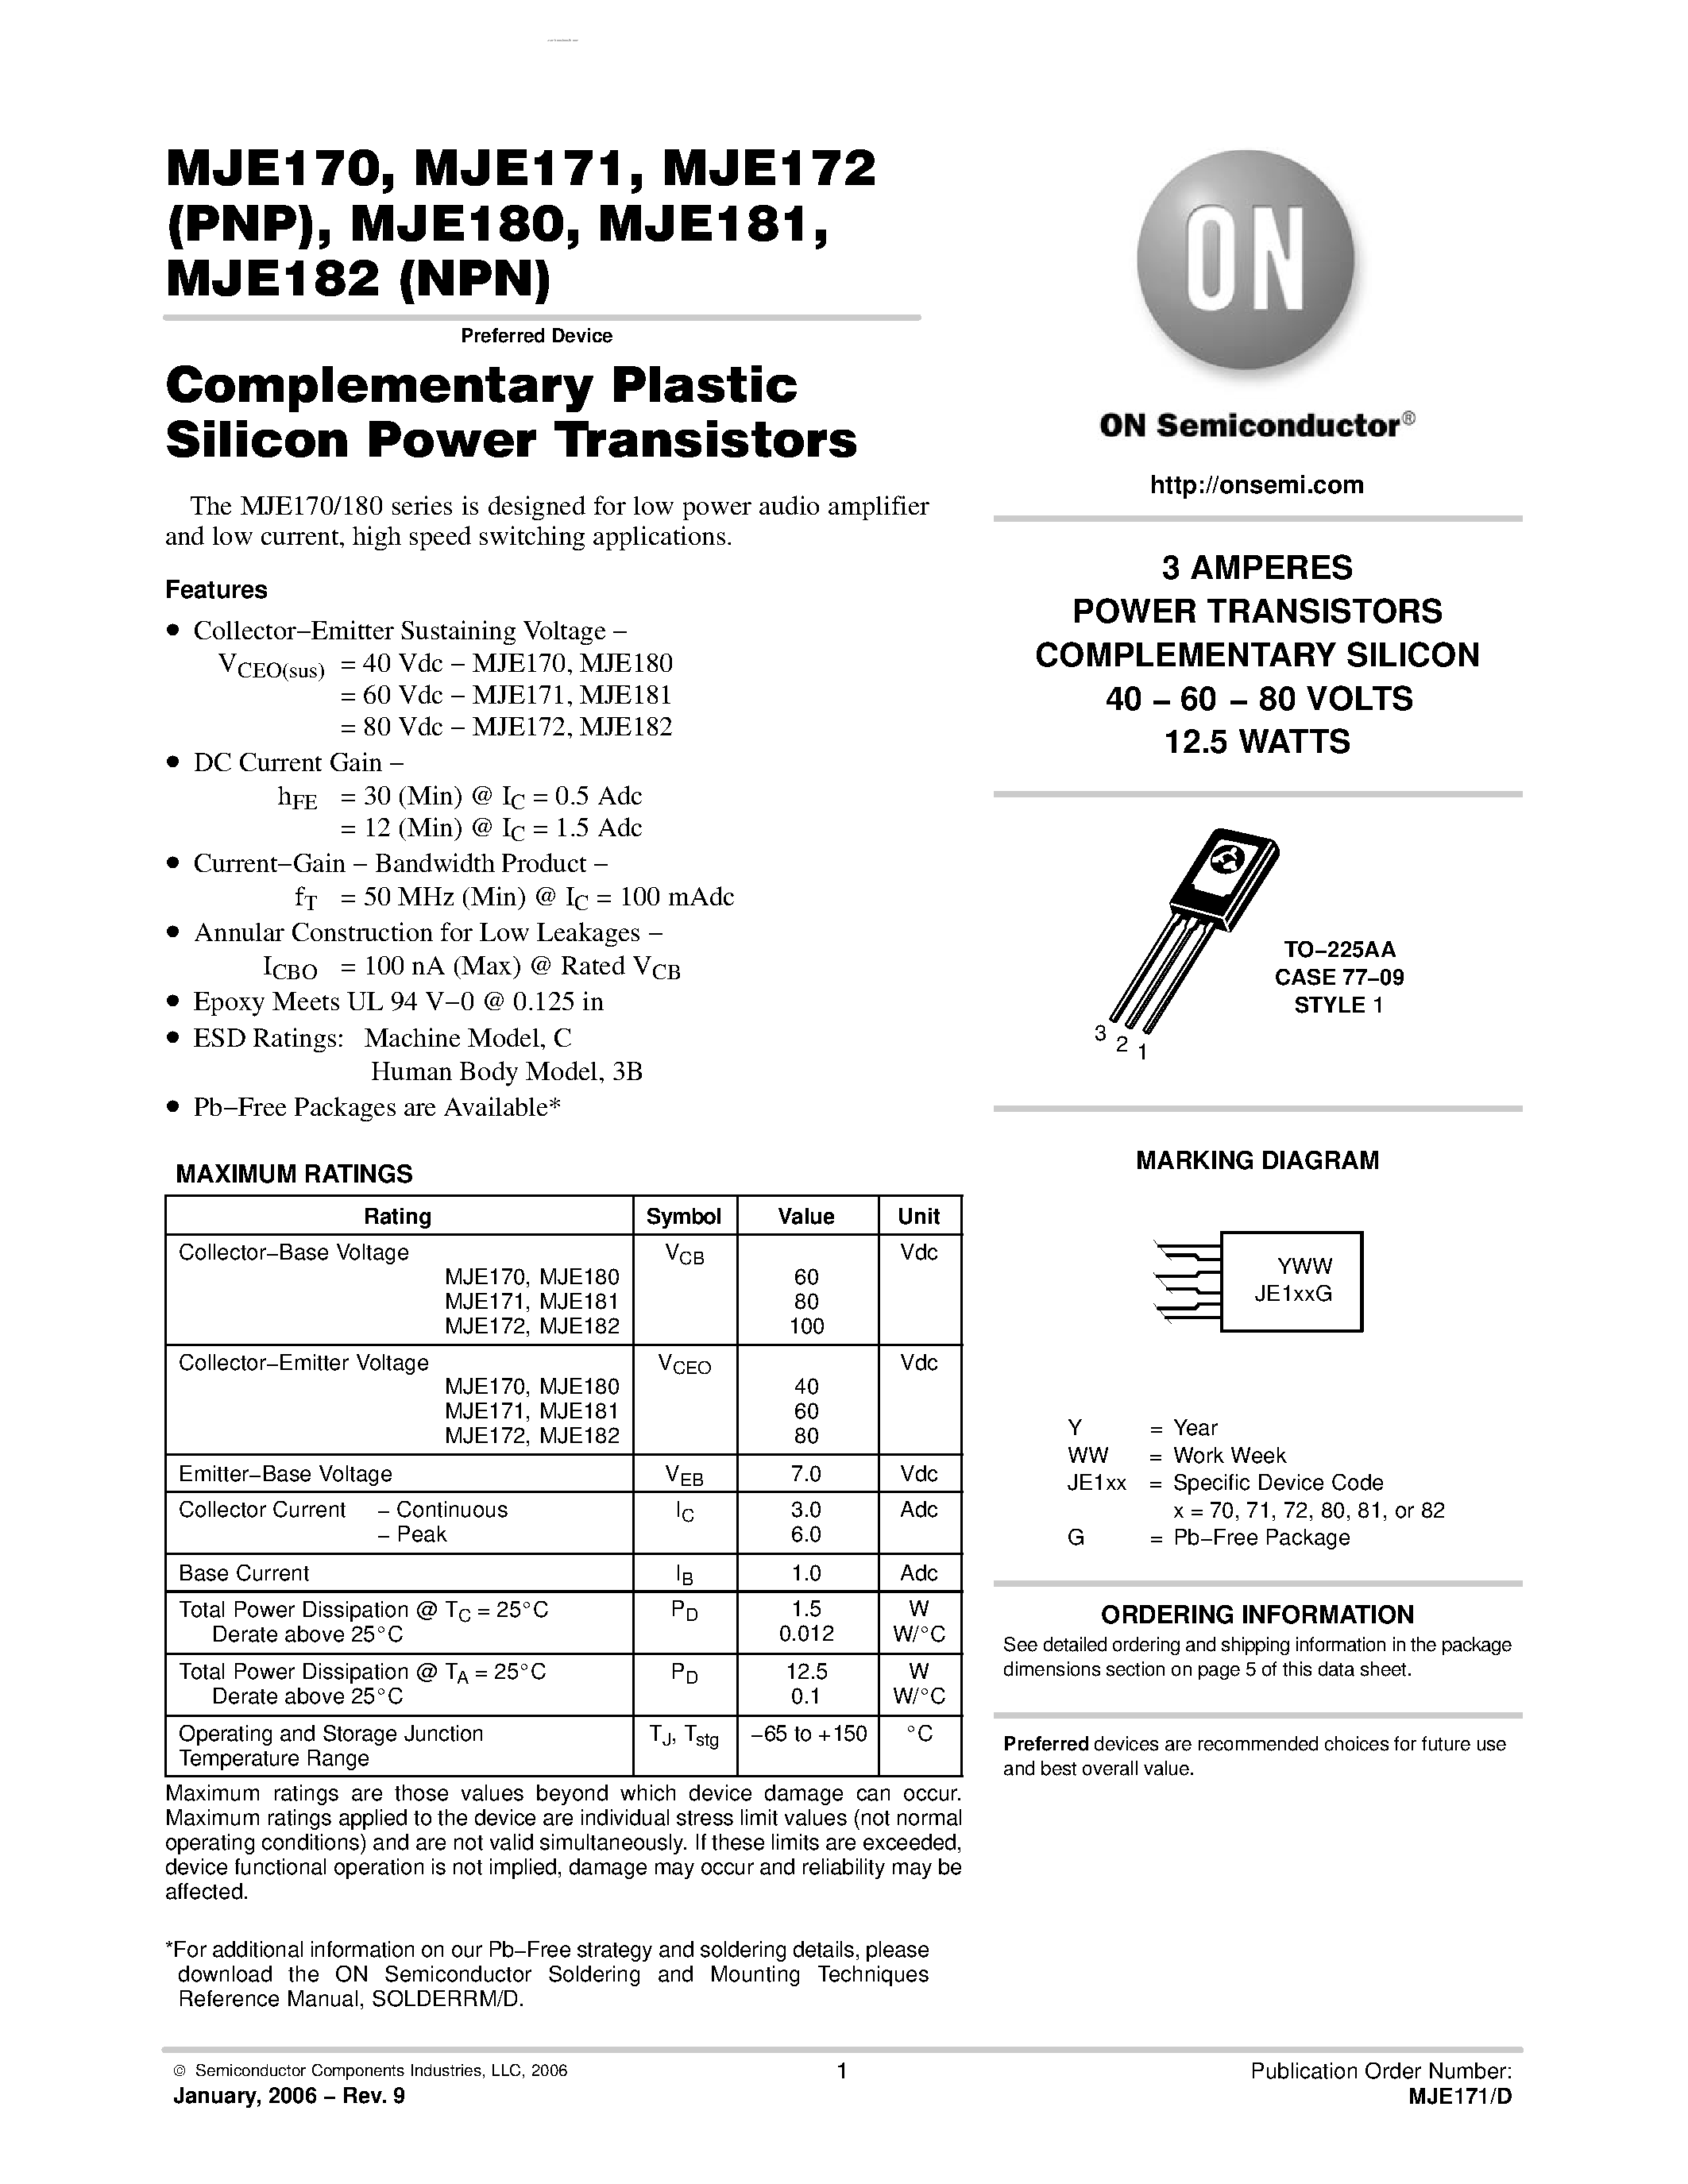 Datasheet MJE170 - (MJE170 - MJE182) Complementary Plastic Silicon Power Transistors page 1